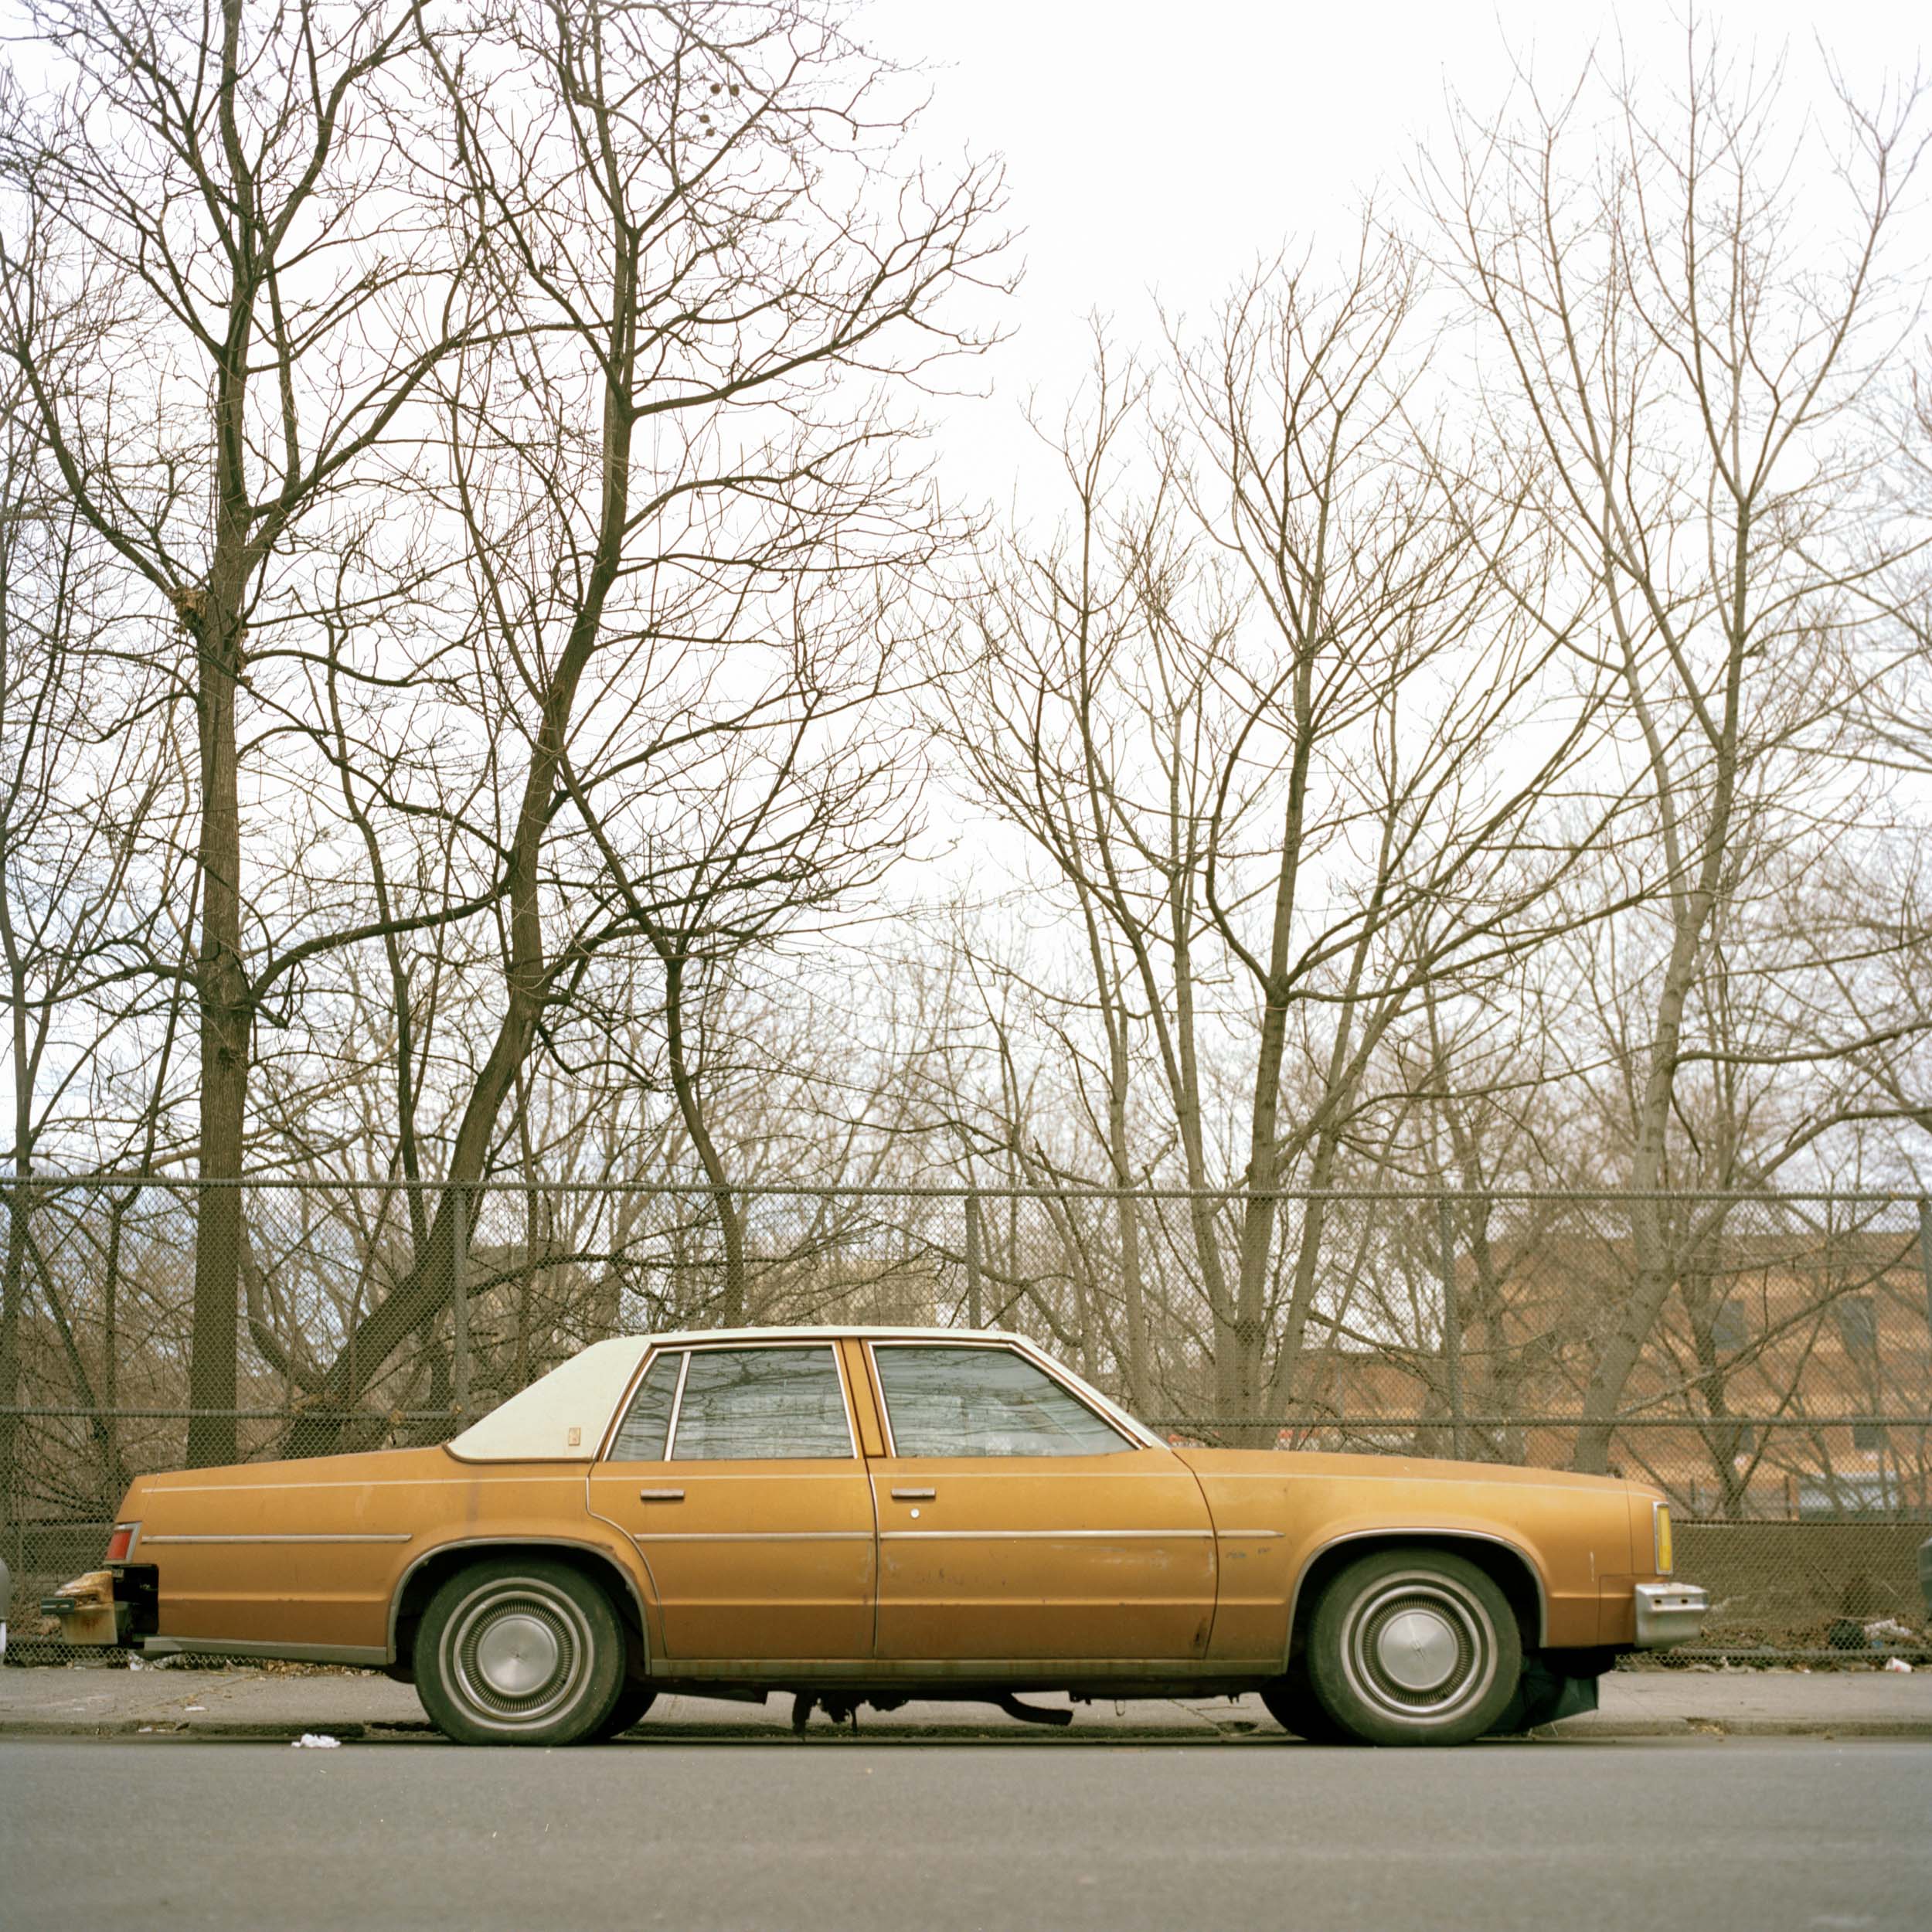 CARS_vintage-car-brown-borough-park-brooklyn-2016-1